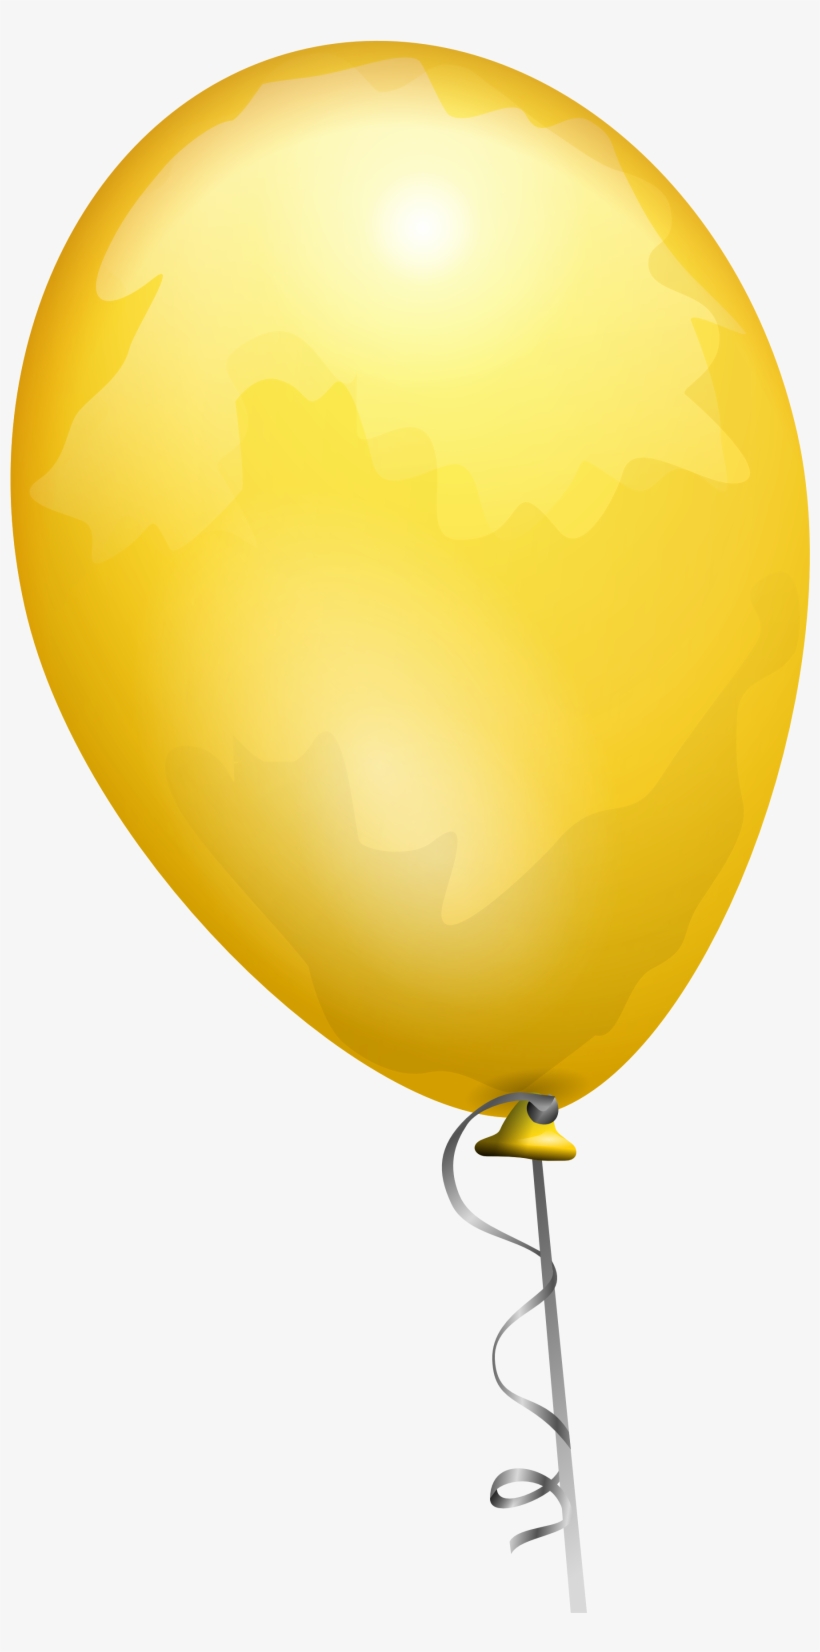 Yellow Balloon Png Image - Balloon Clip Art, transparent png #16522